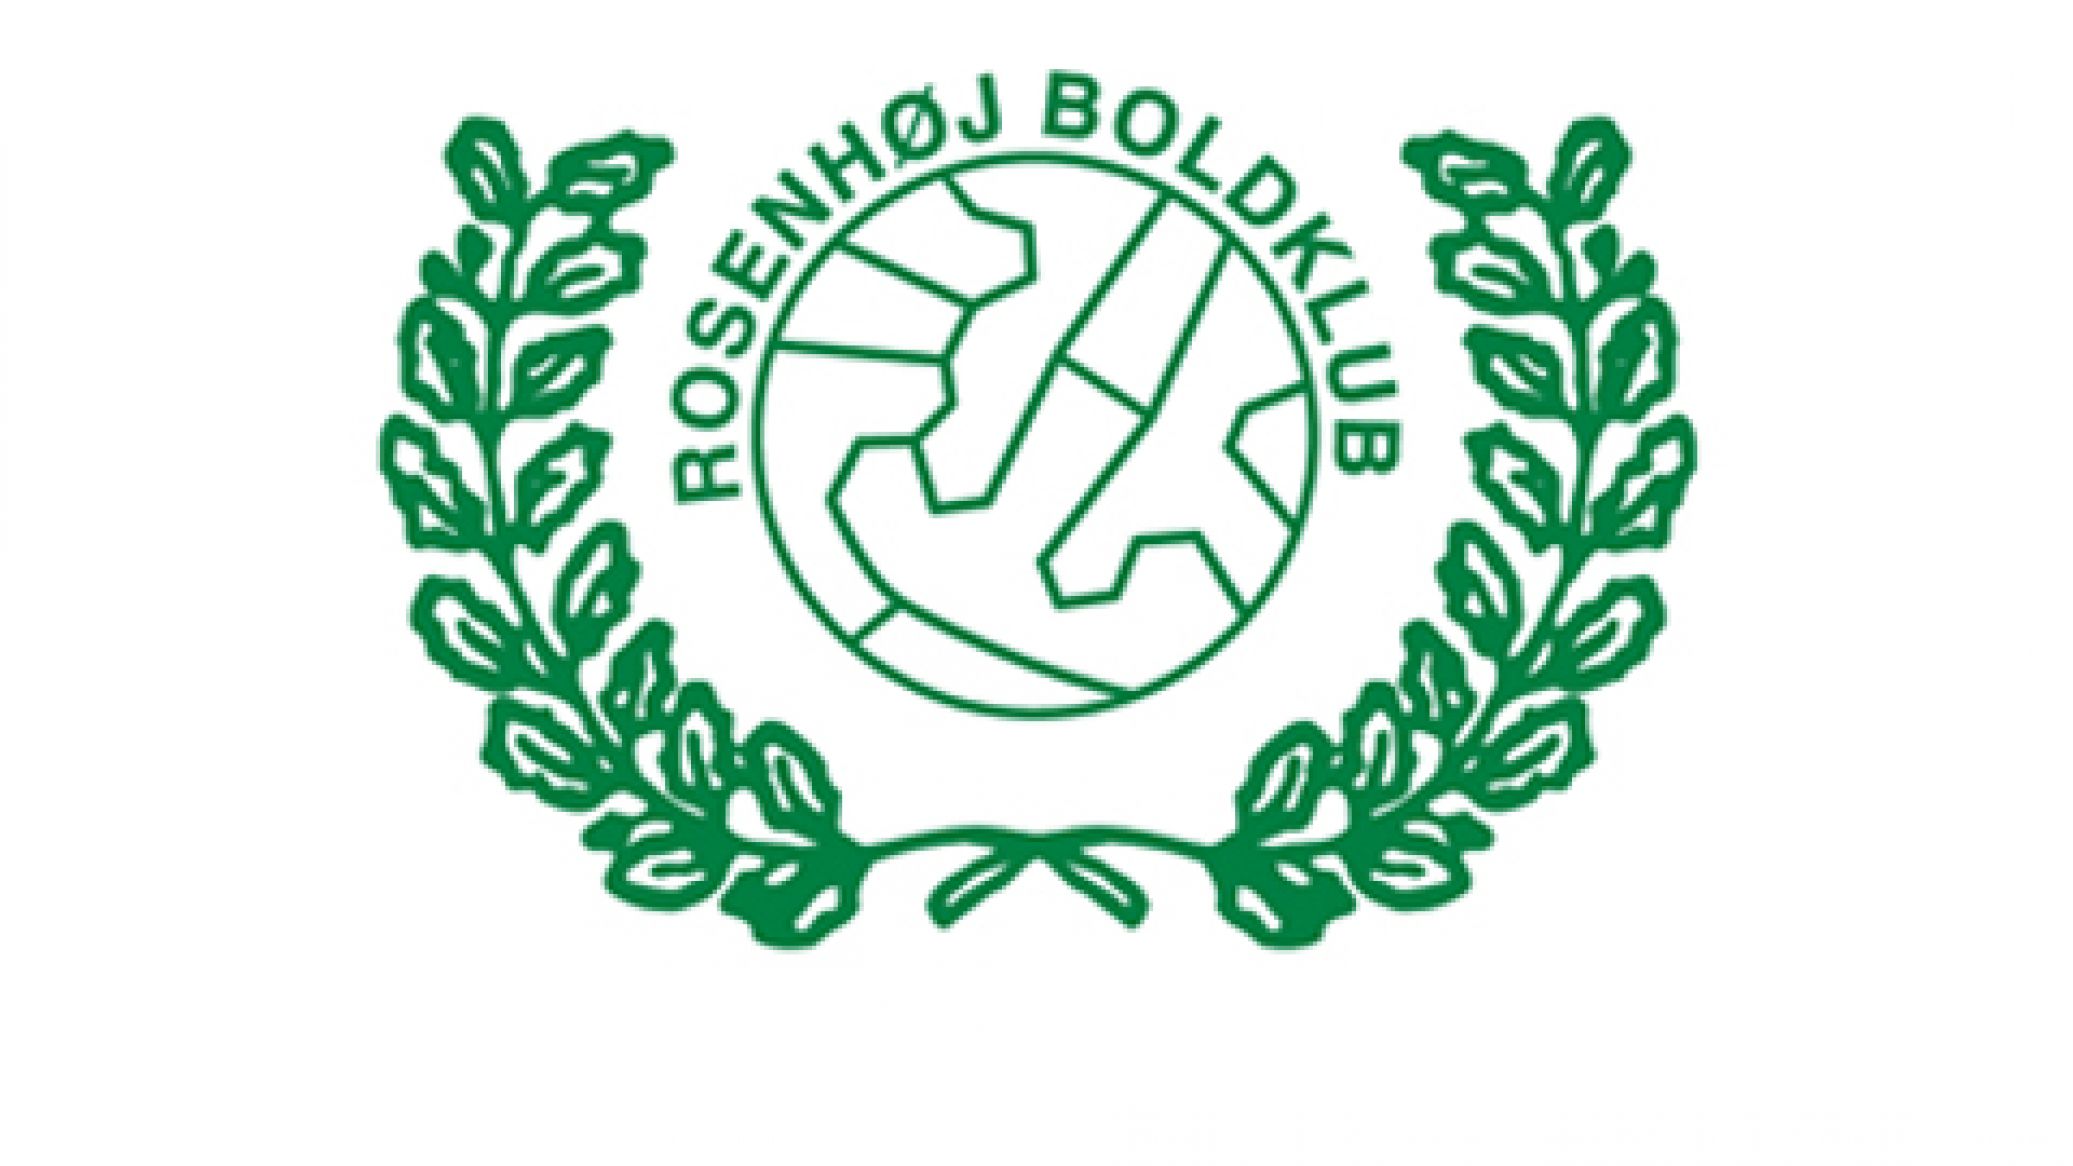 Rosenhøj Boldklub